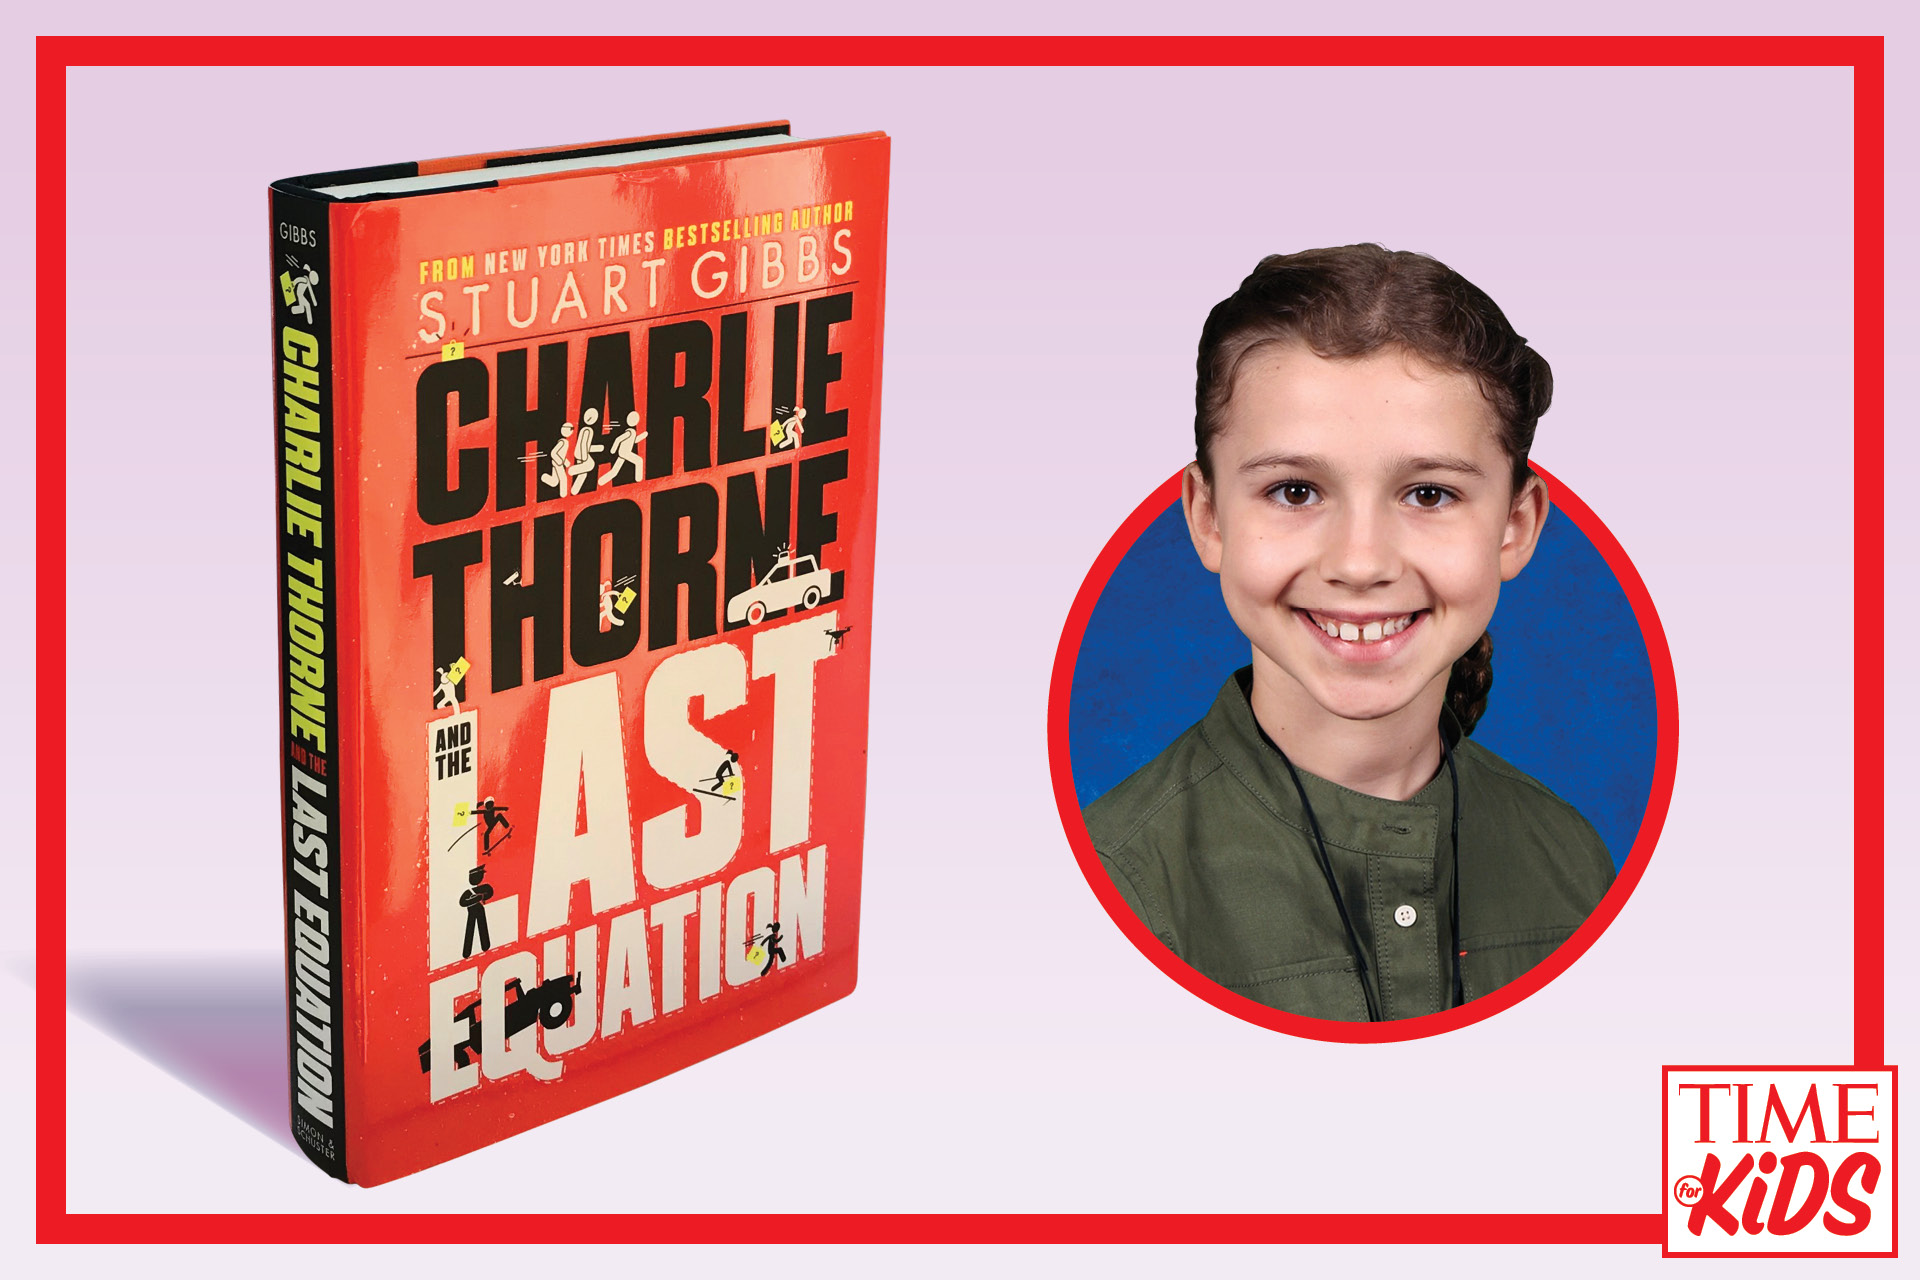 TFK Kid Reporter Zara Wierzbowski Reviews Charlie Thorne and the Last Equation by Stuart Gibbs